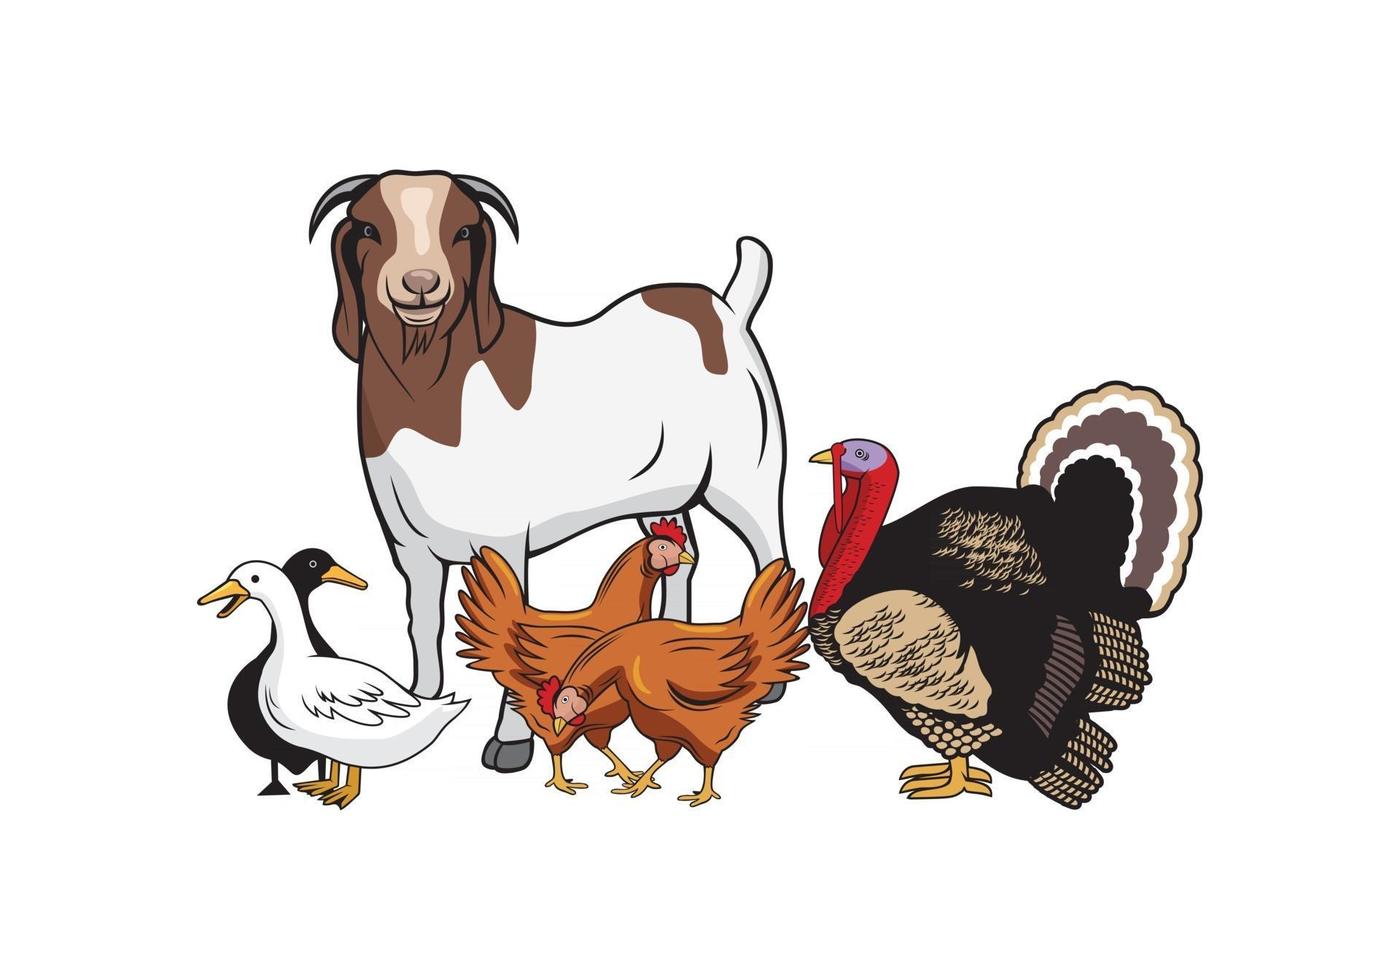 Cattle animals farm design illustration vector eps format , suitable for your design needs, logo, illustration, animation, etc.